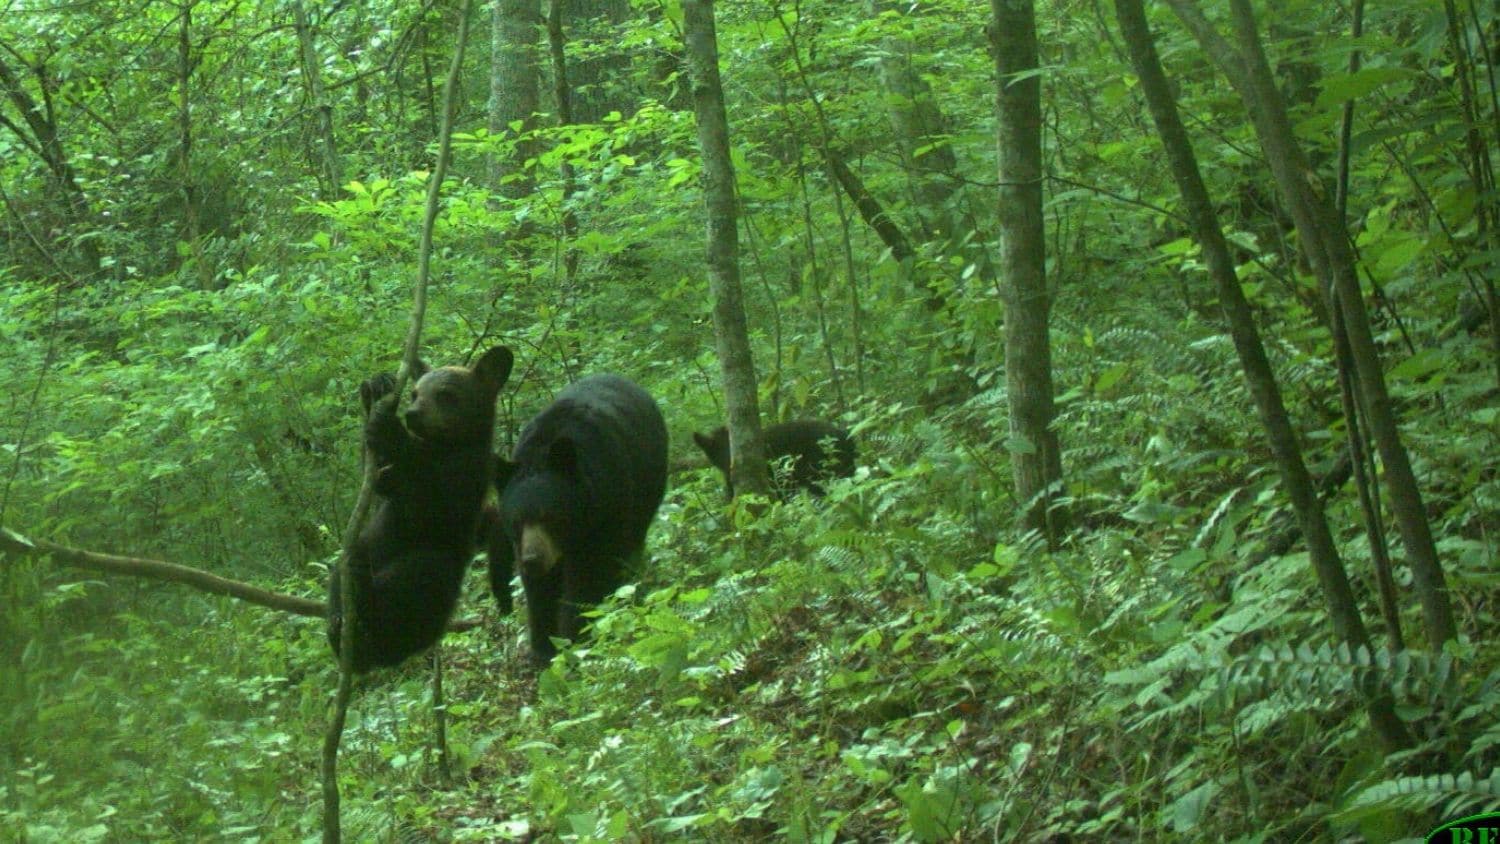 Black bears captured on camera in North Carolina.